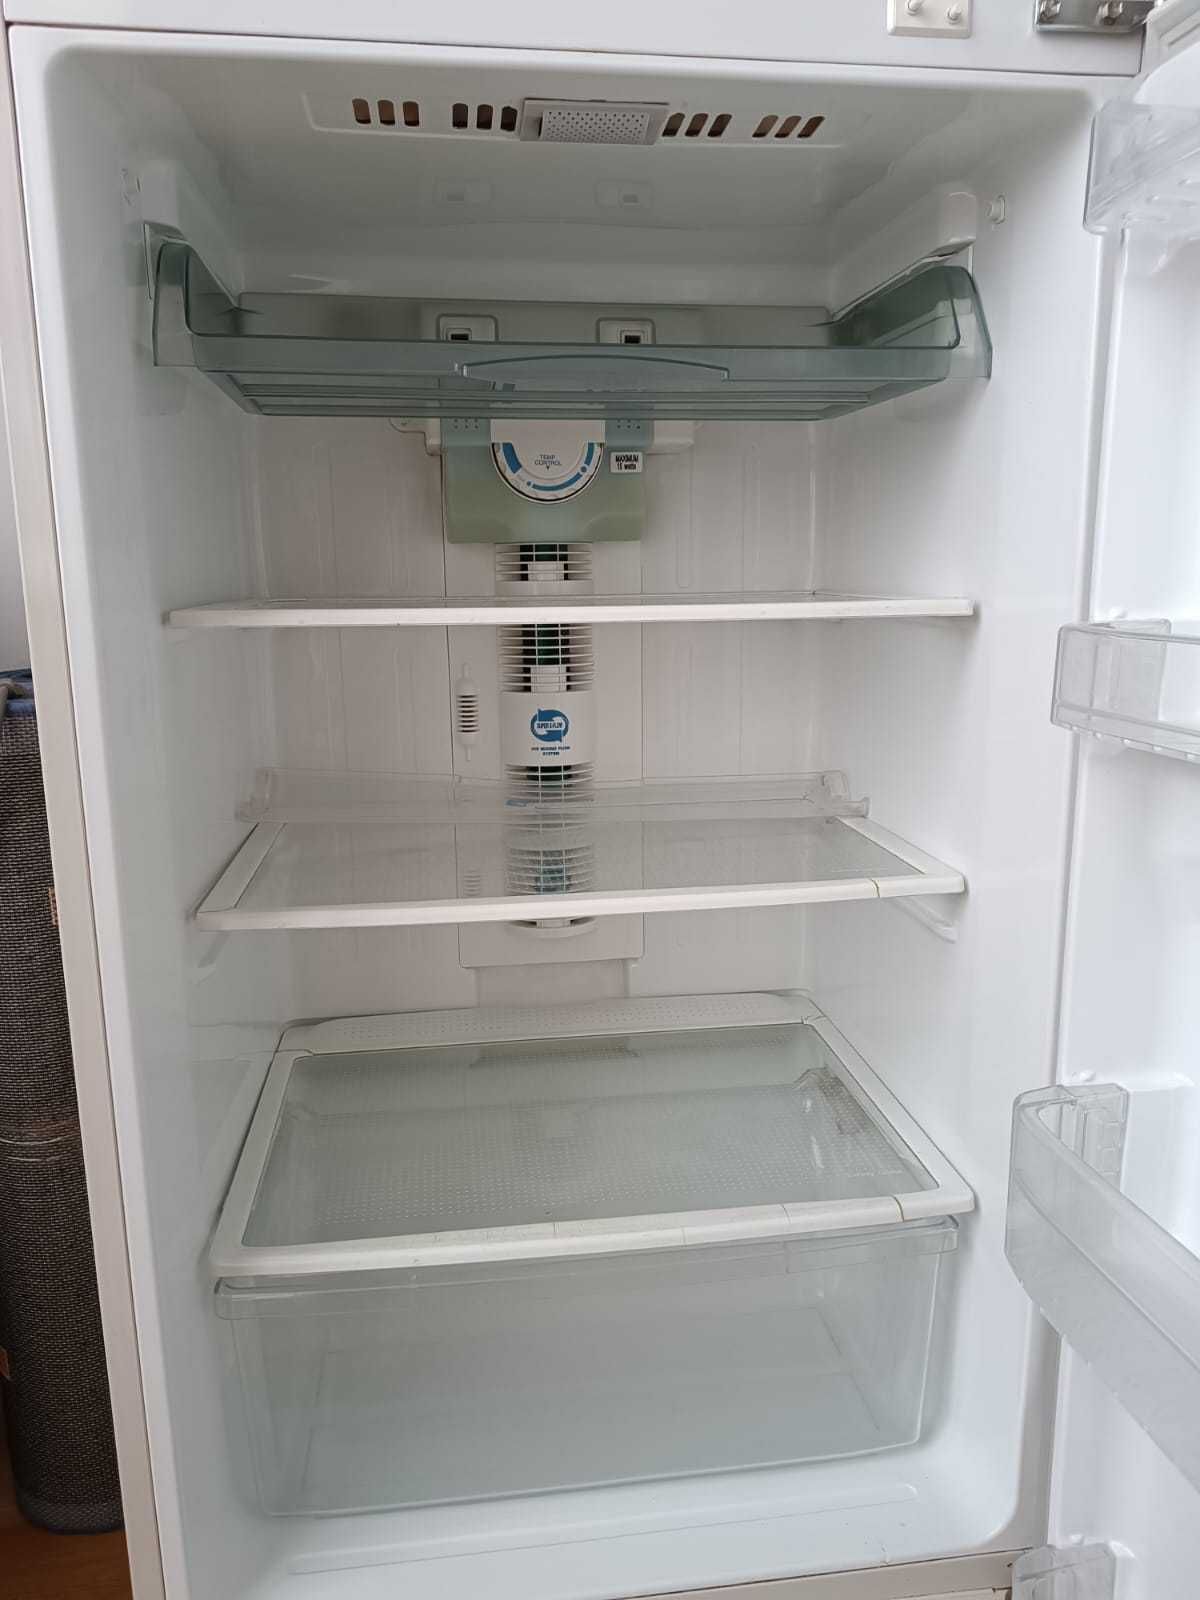 Холодильник Samsung SR-57NXA (X-Flow)